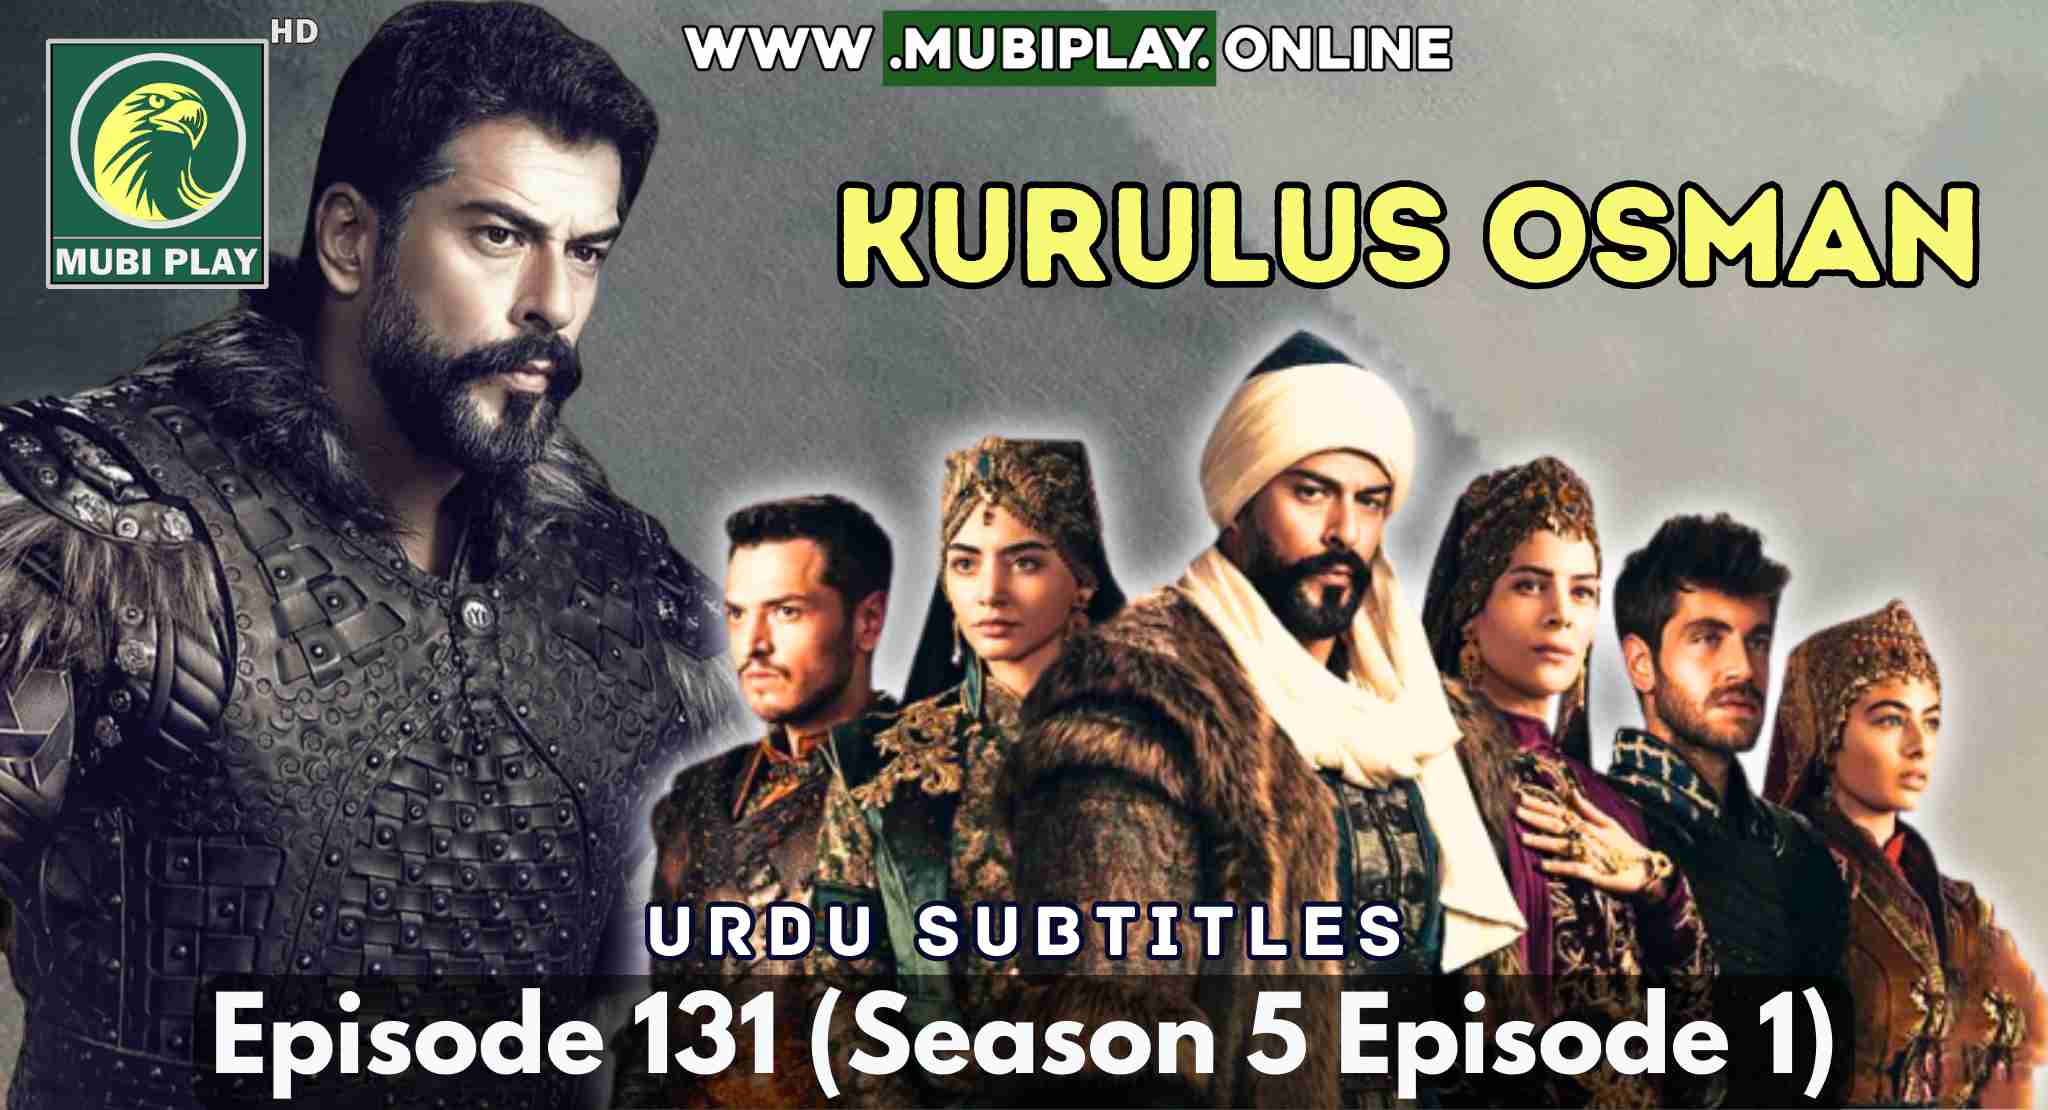 Kurulus Osman Episode 131 with Urdu Subtitles by Mubi Play